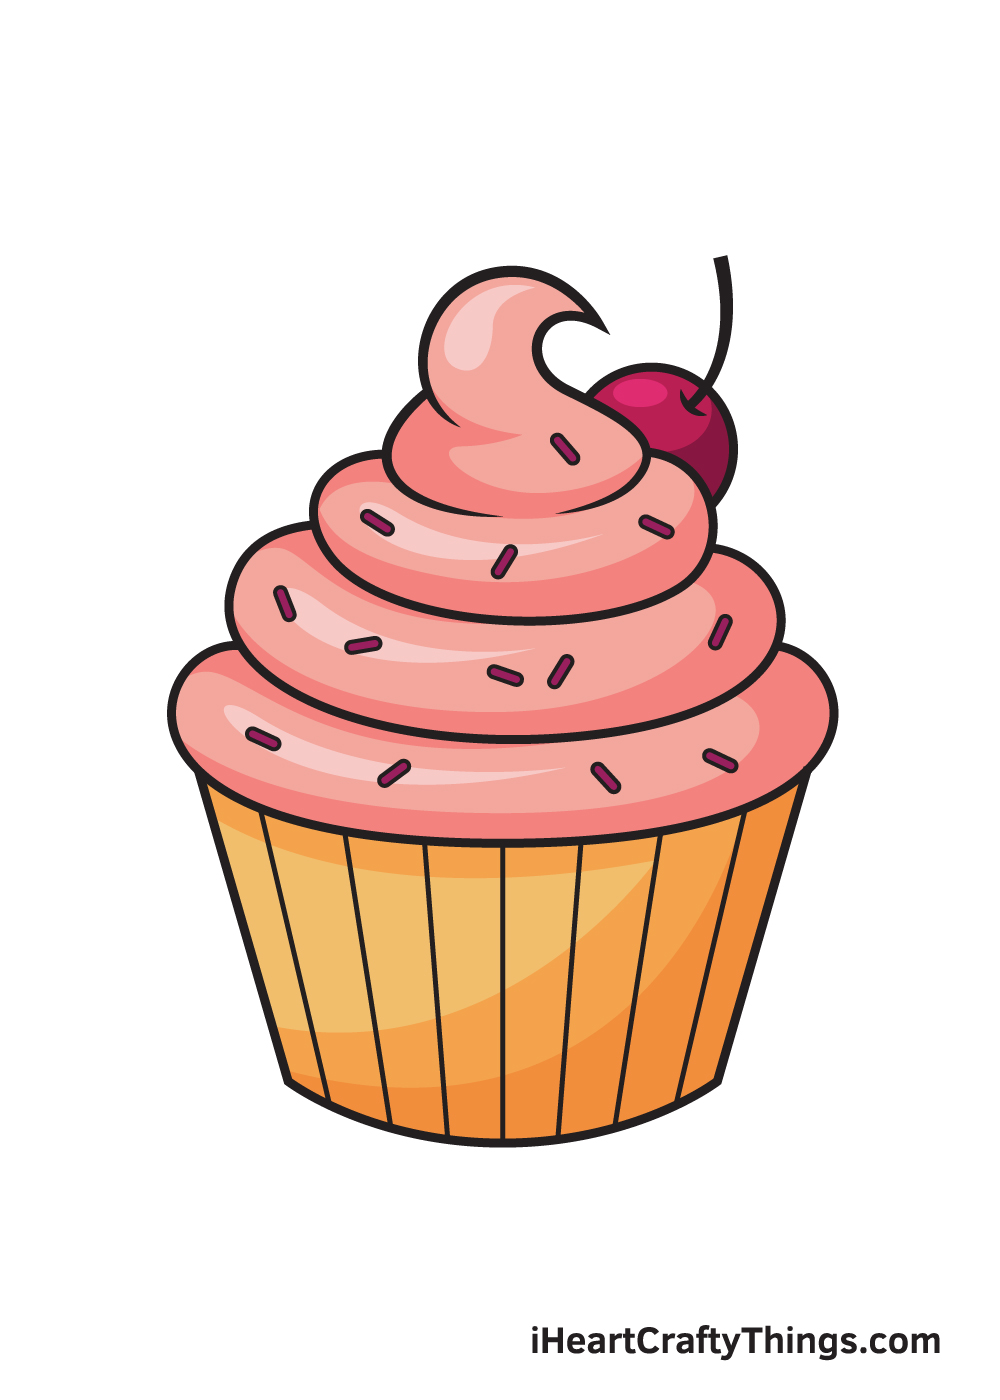 Cupcake Drawing – 9 Steps